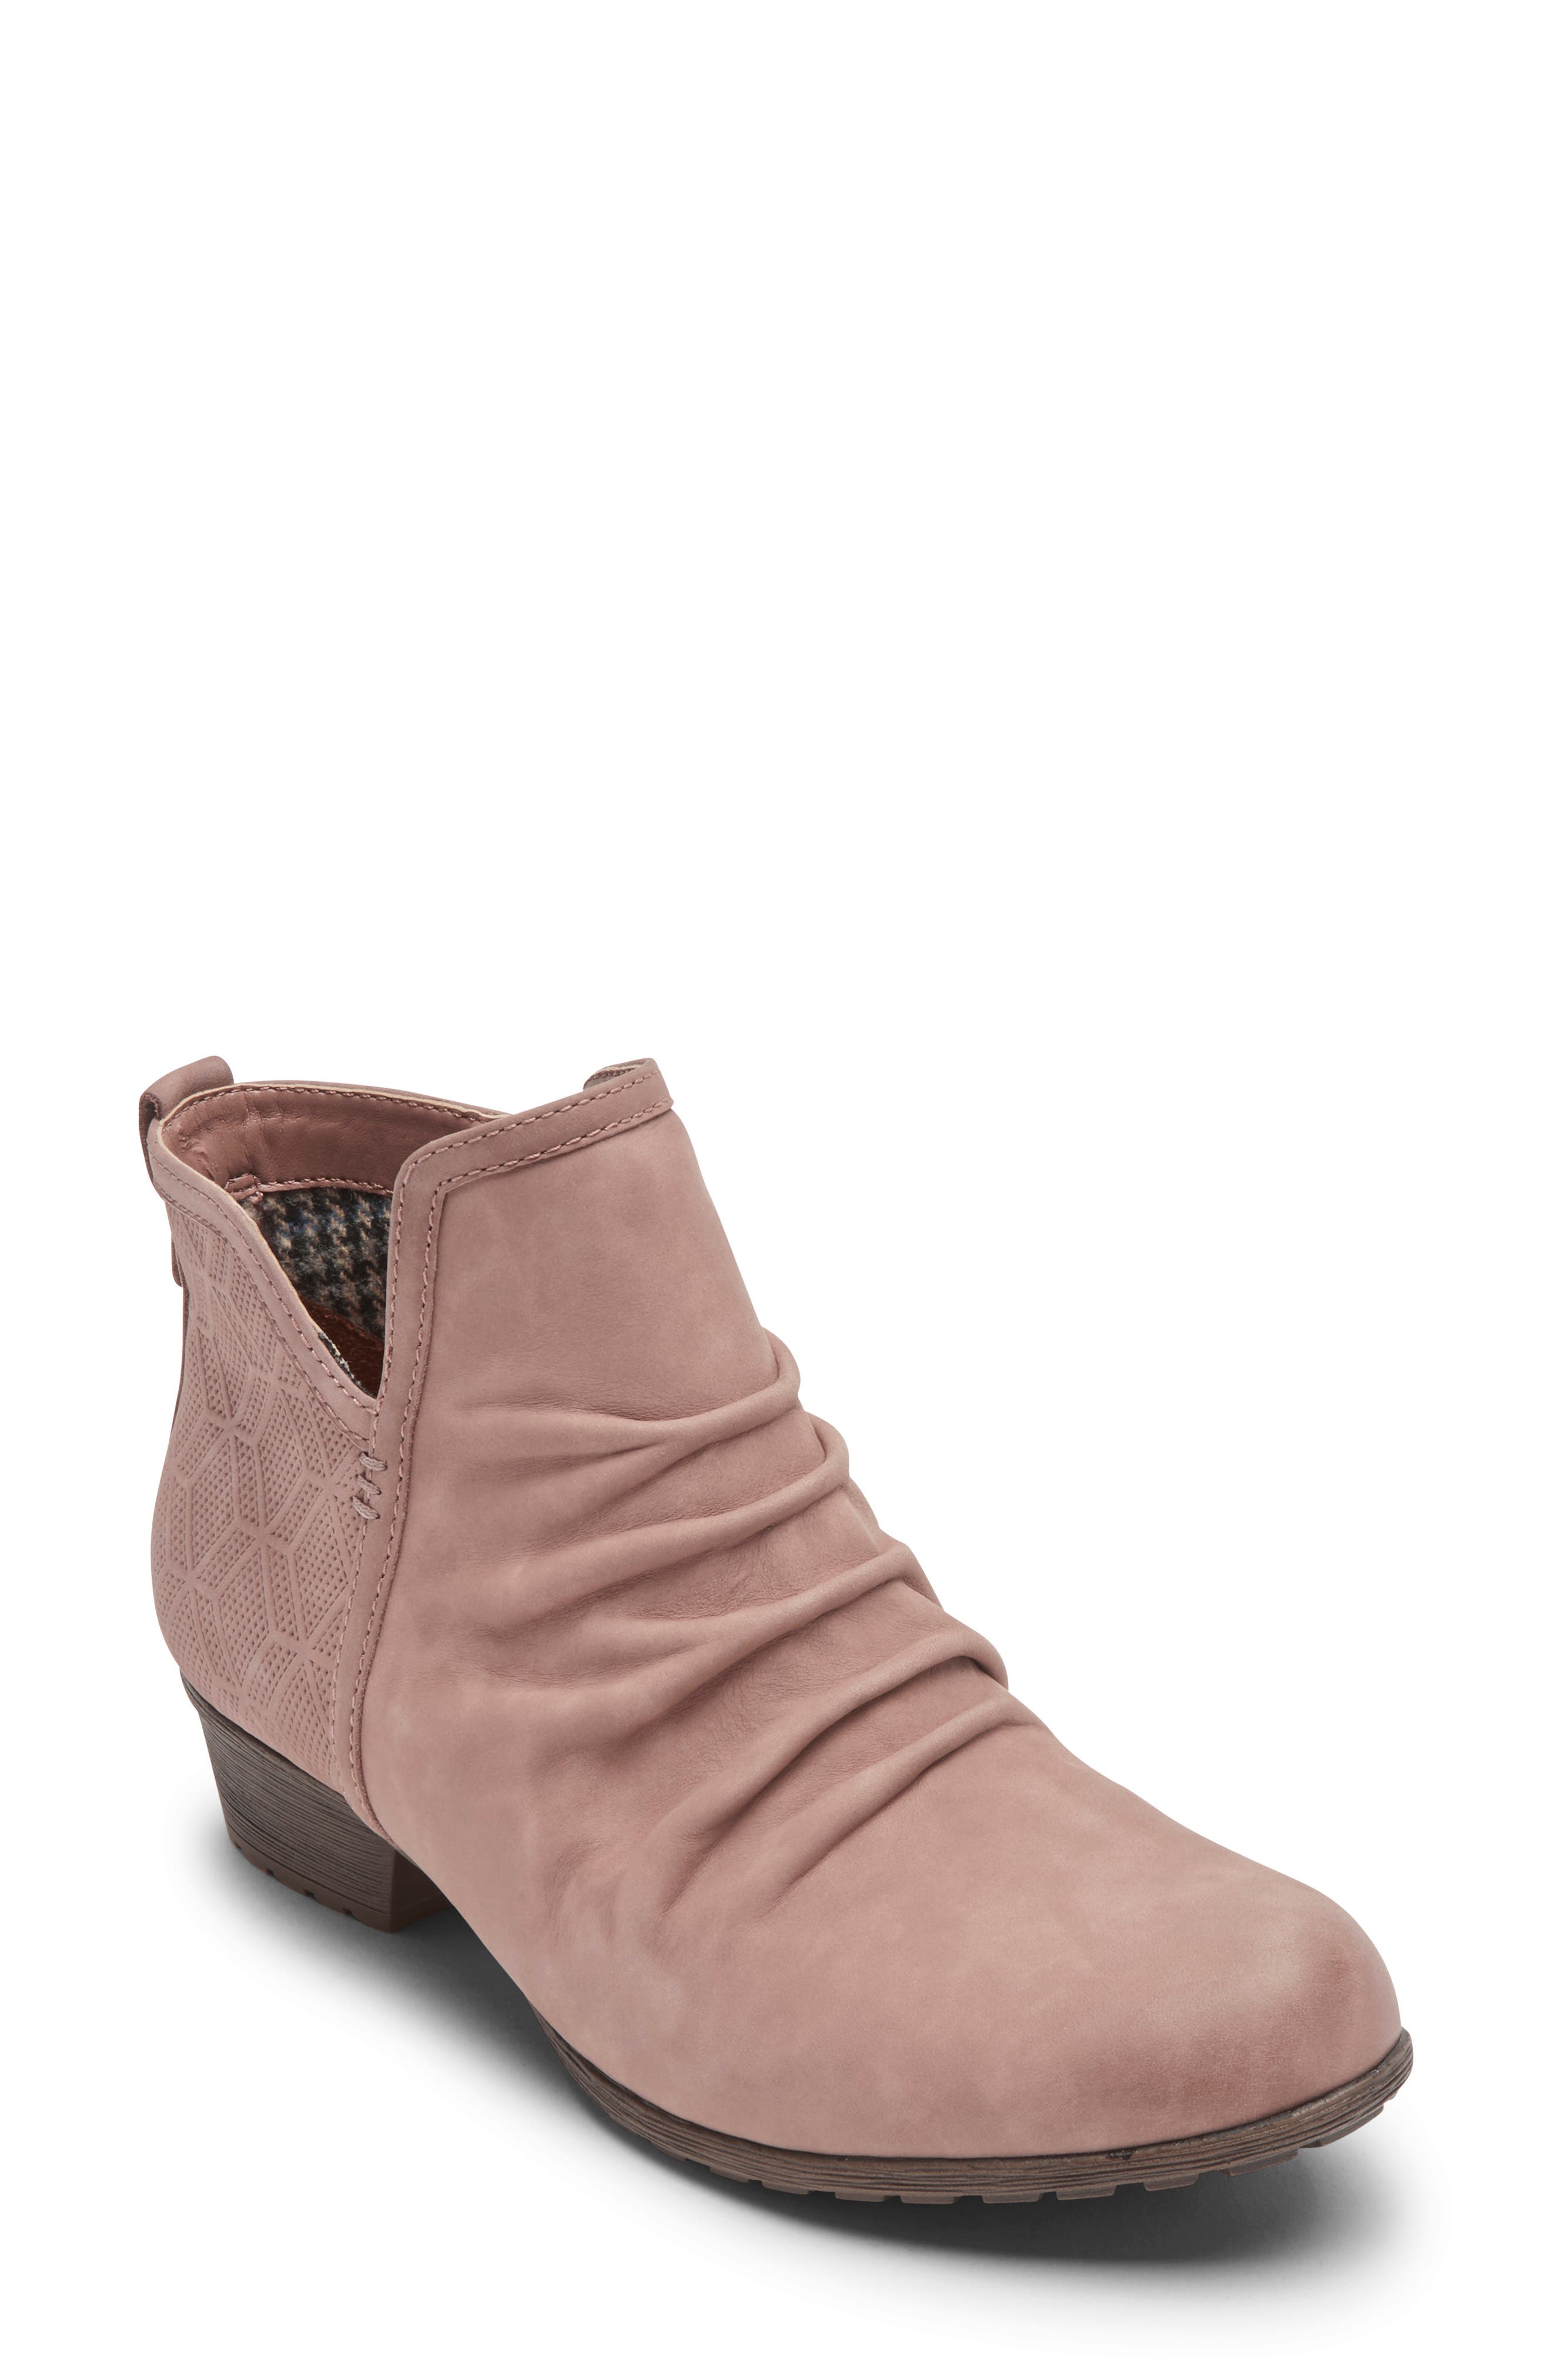 womens boots narrow width